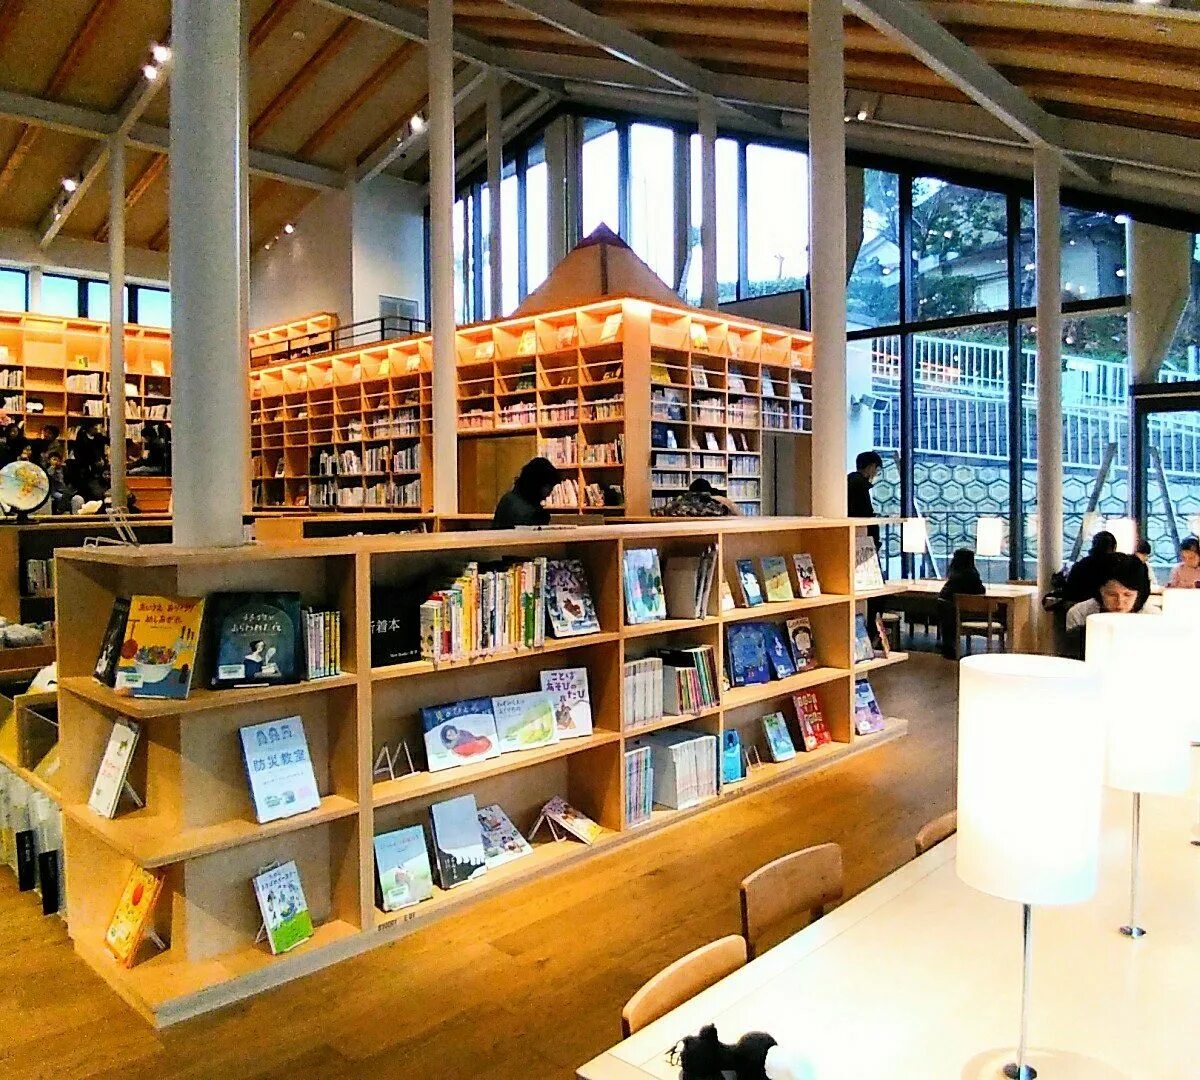 City library. Библиотека в Японии. Японская библиотека. Библиотека 258. City Library in Dombrin.